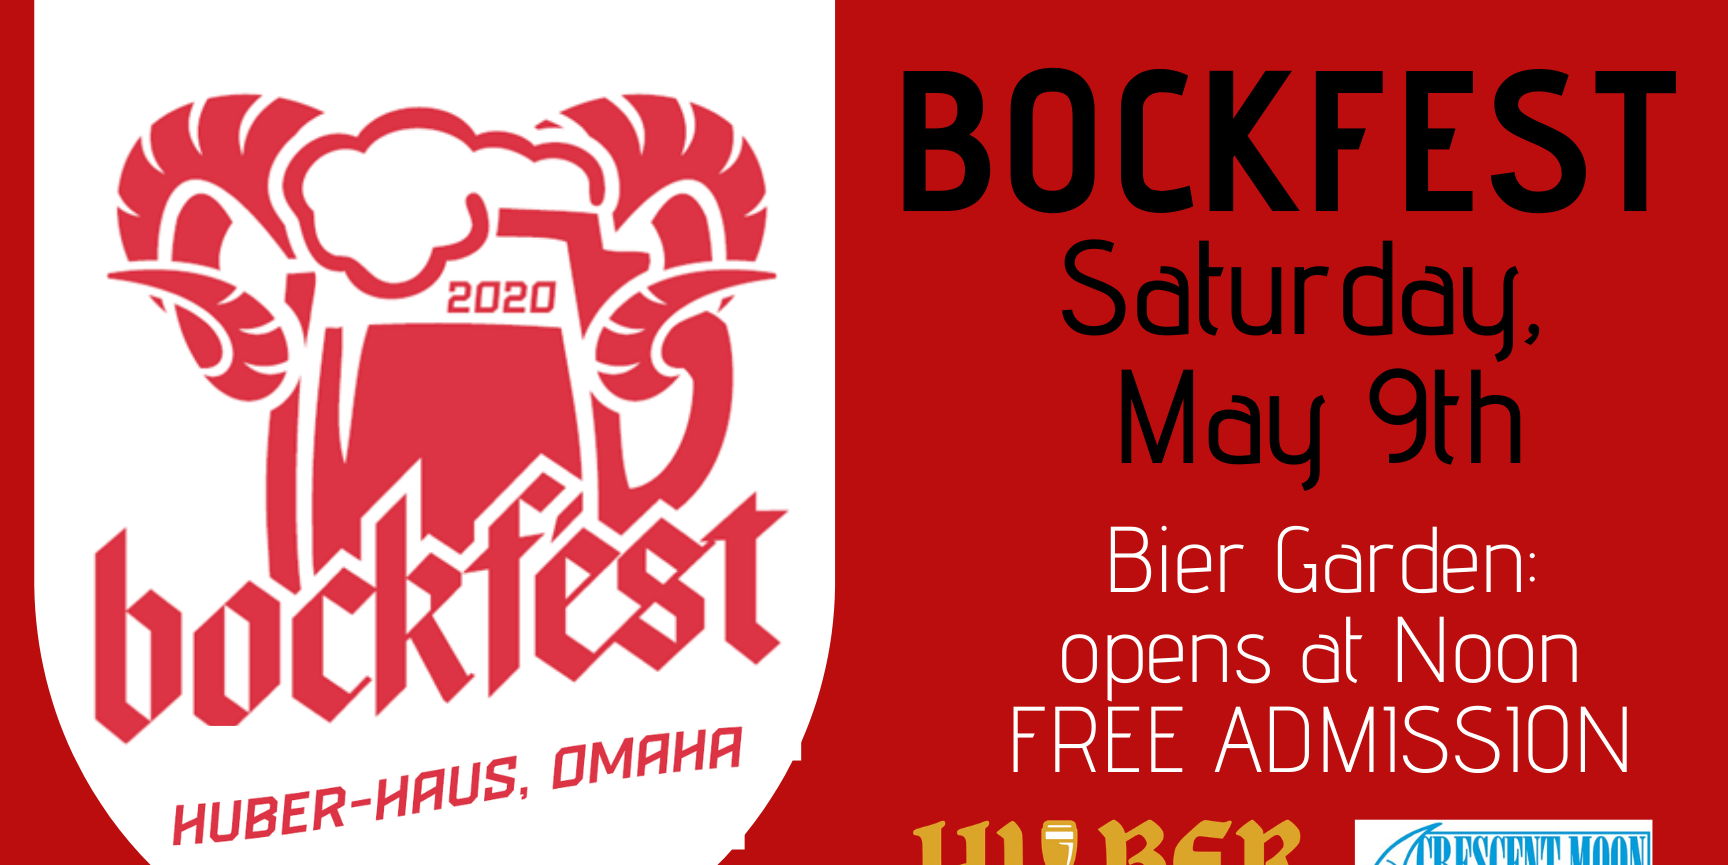 Bockfest 2020 promotional image